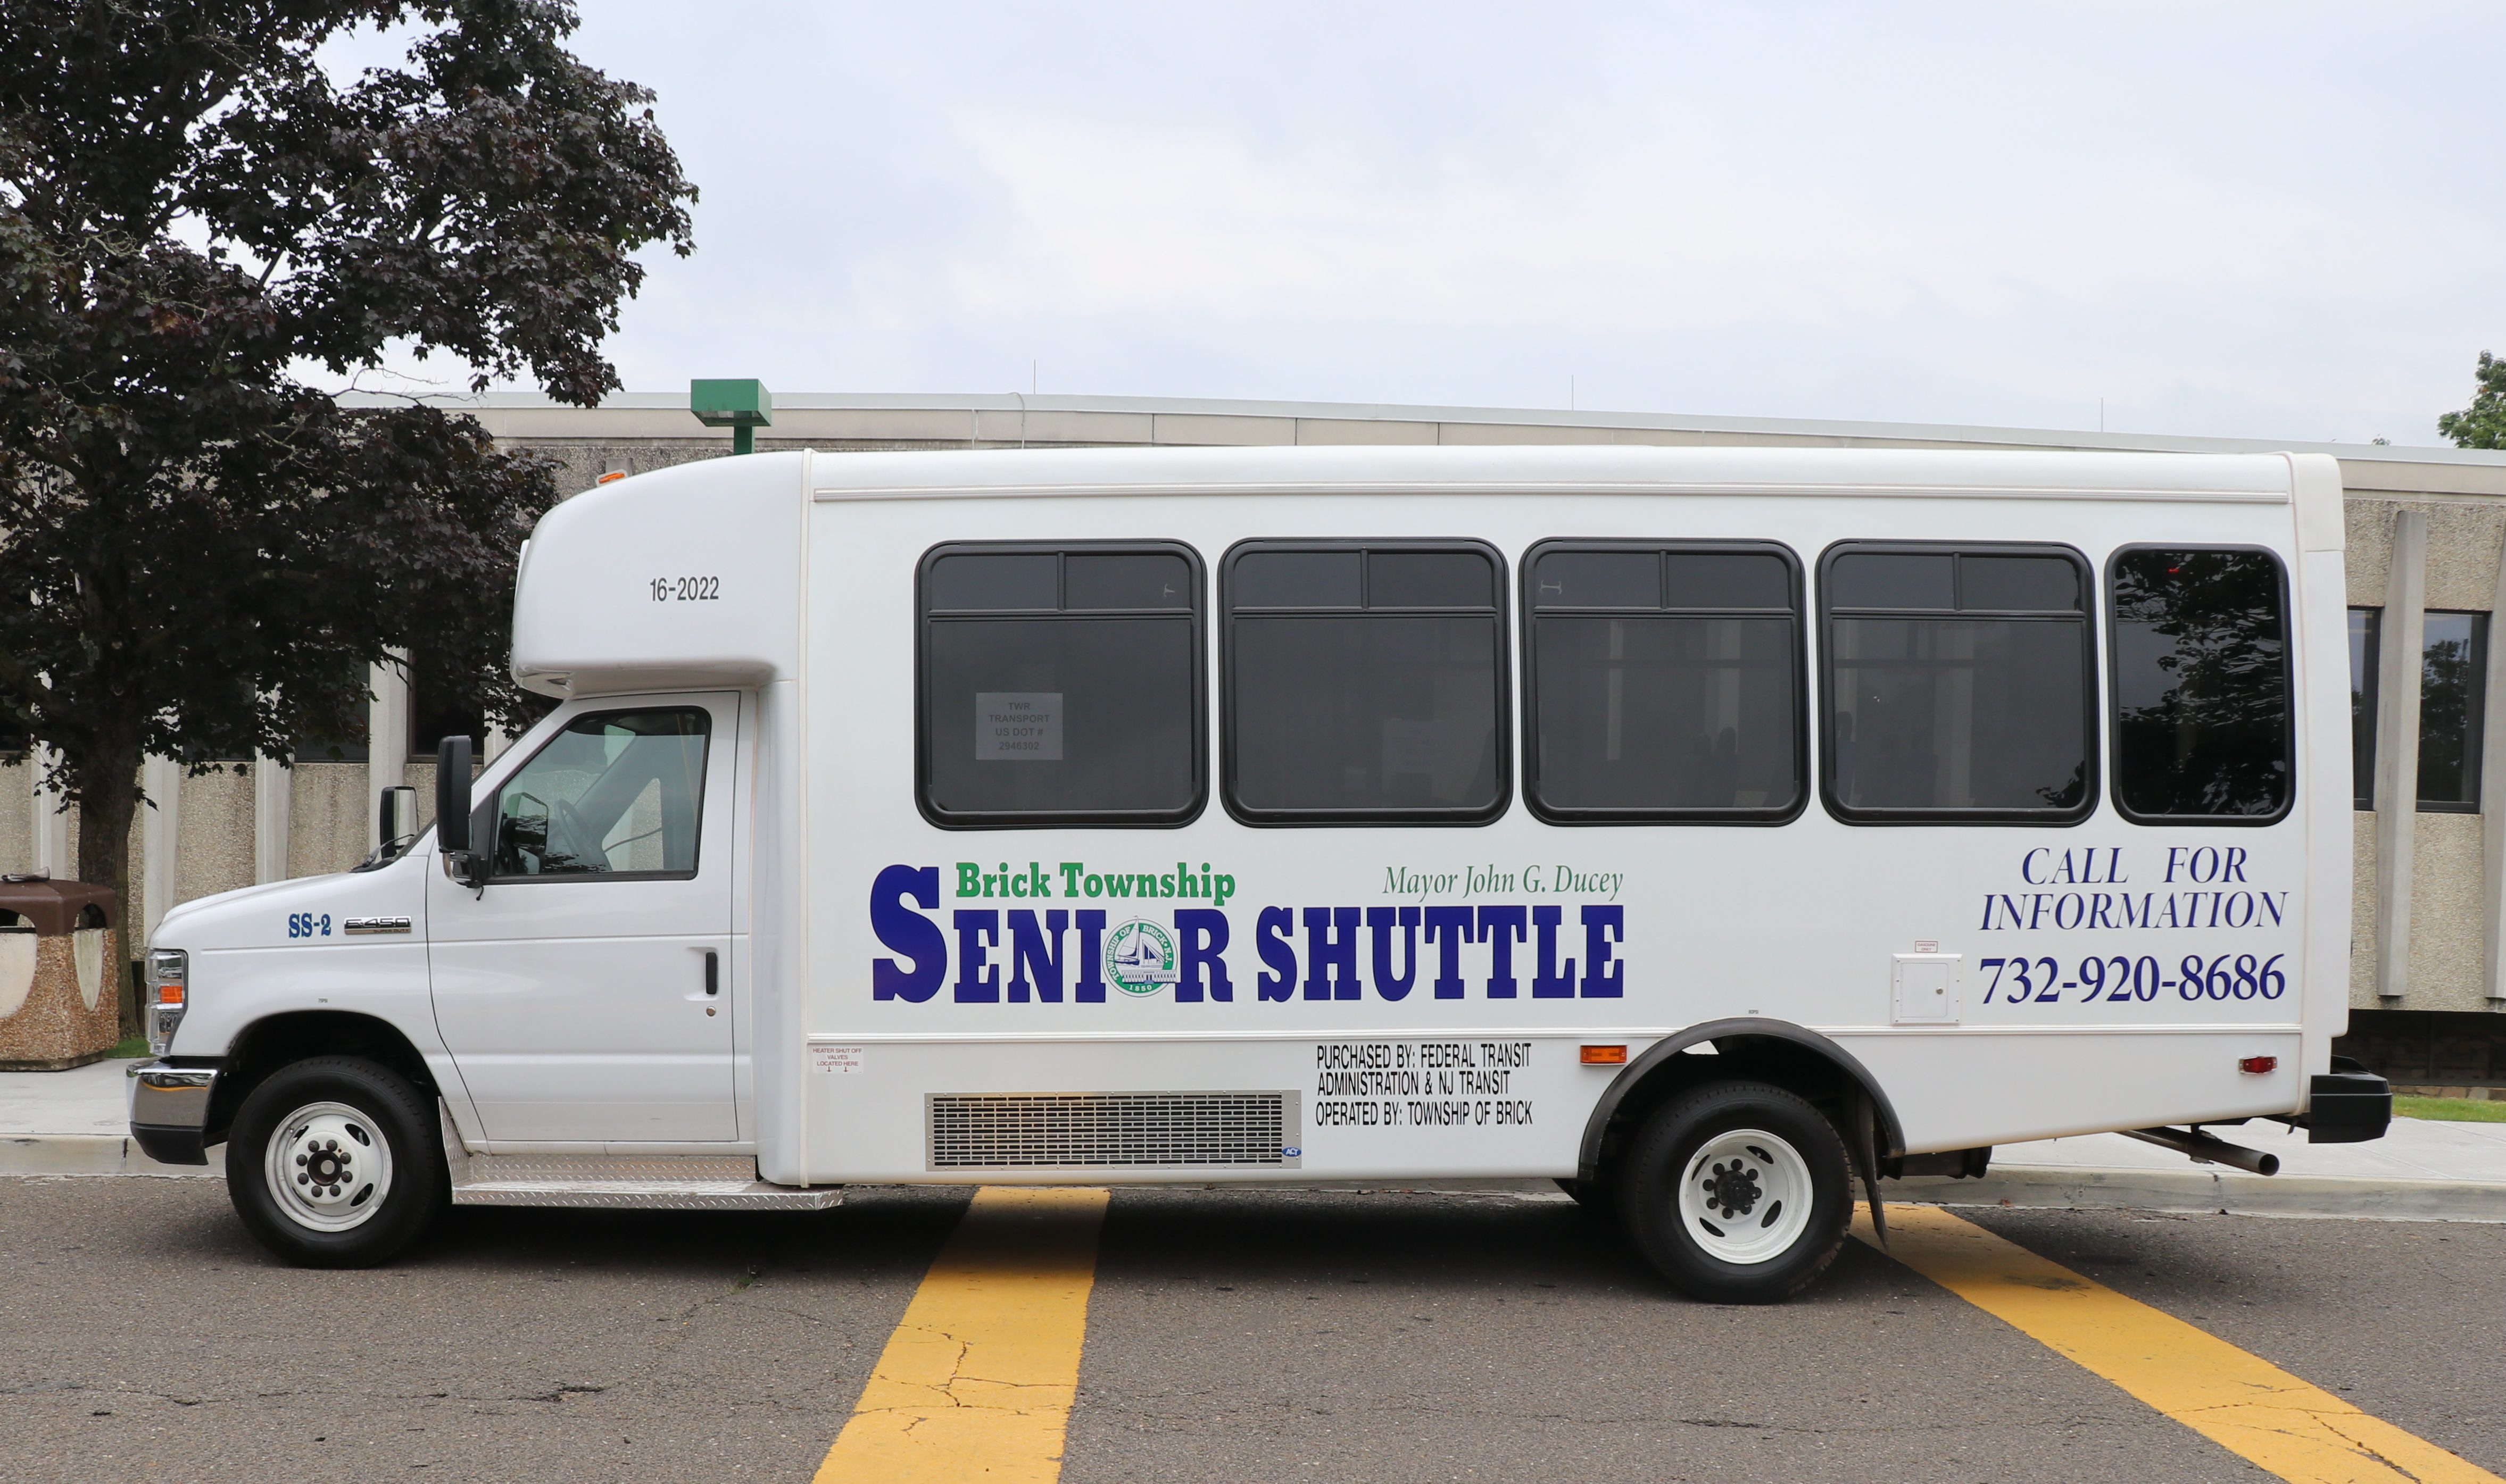 The Brick Township Senior Shuttle